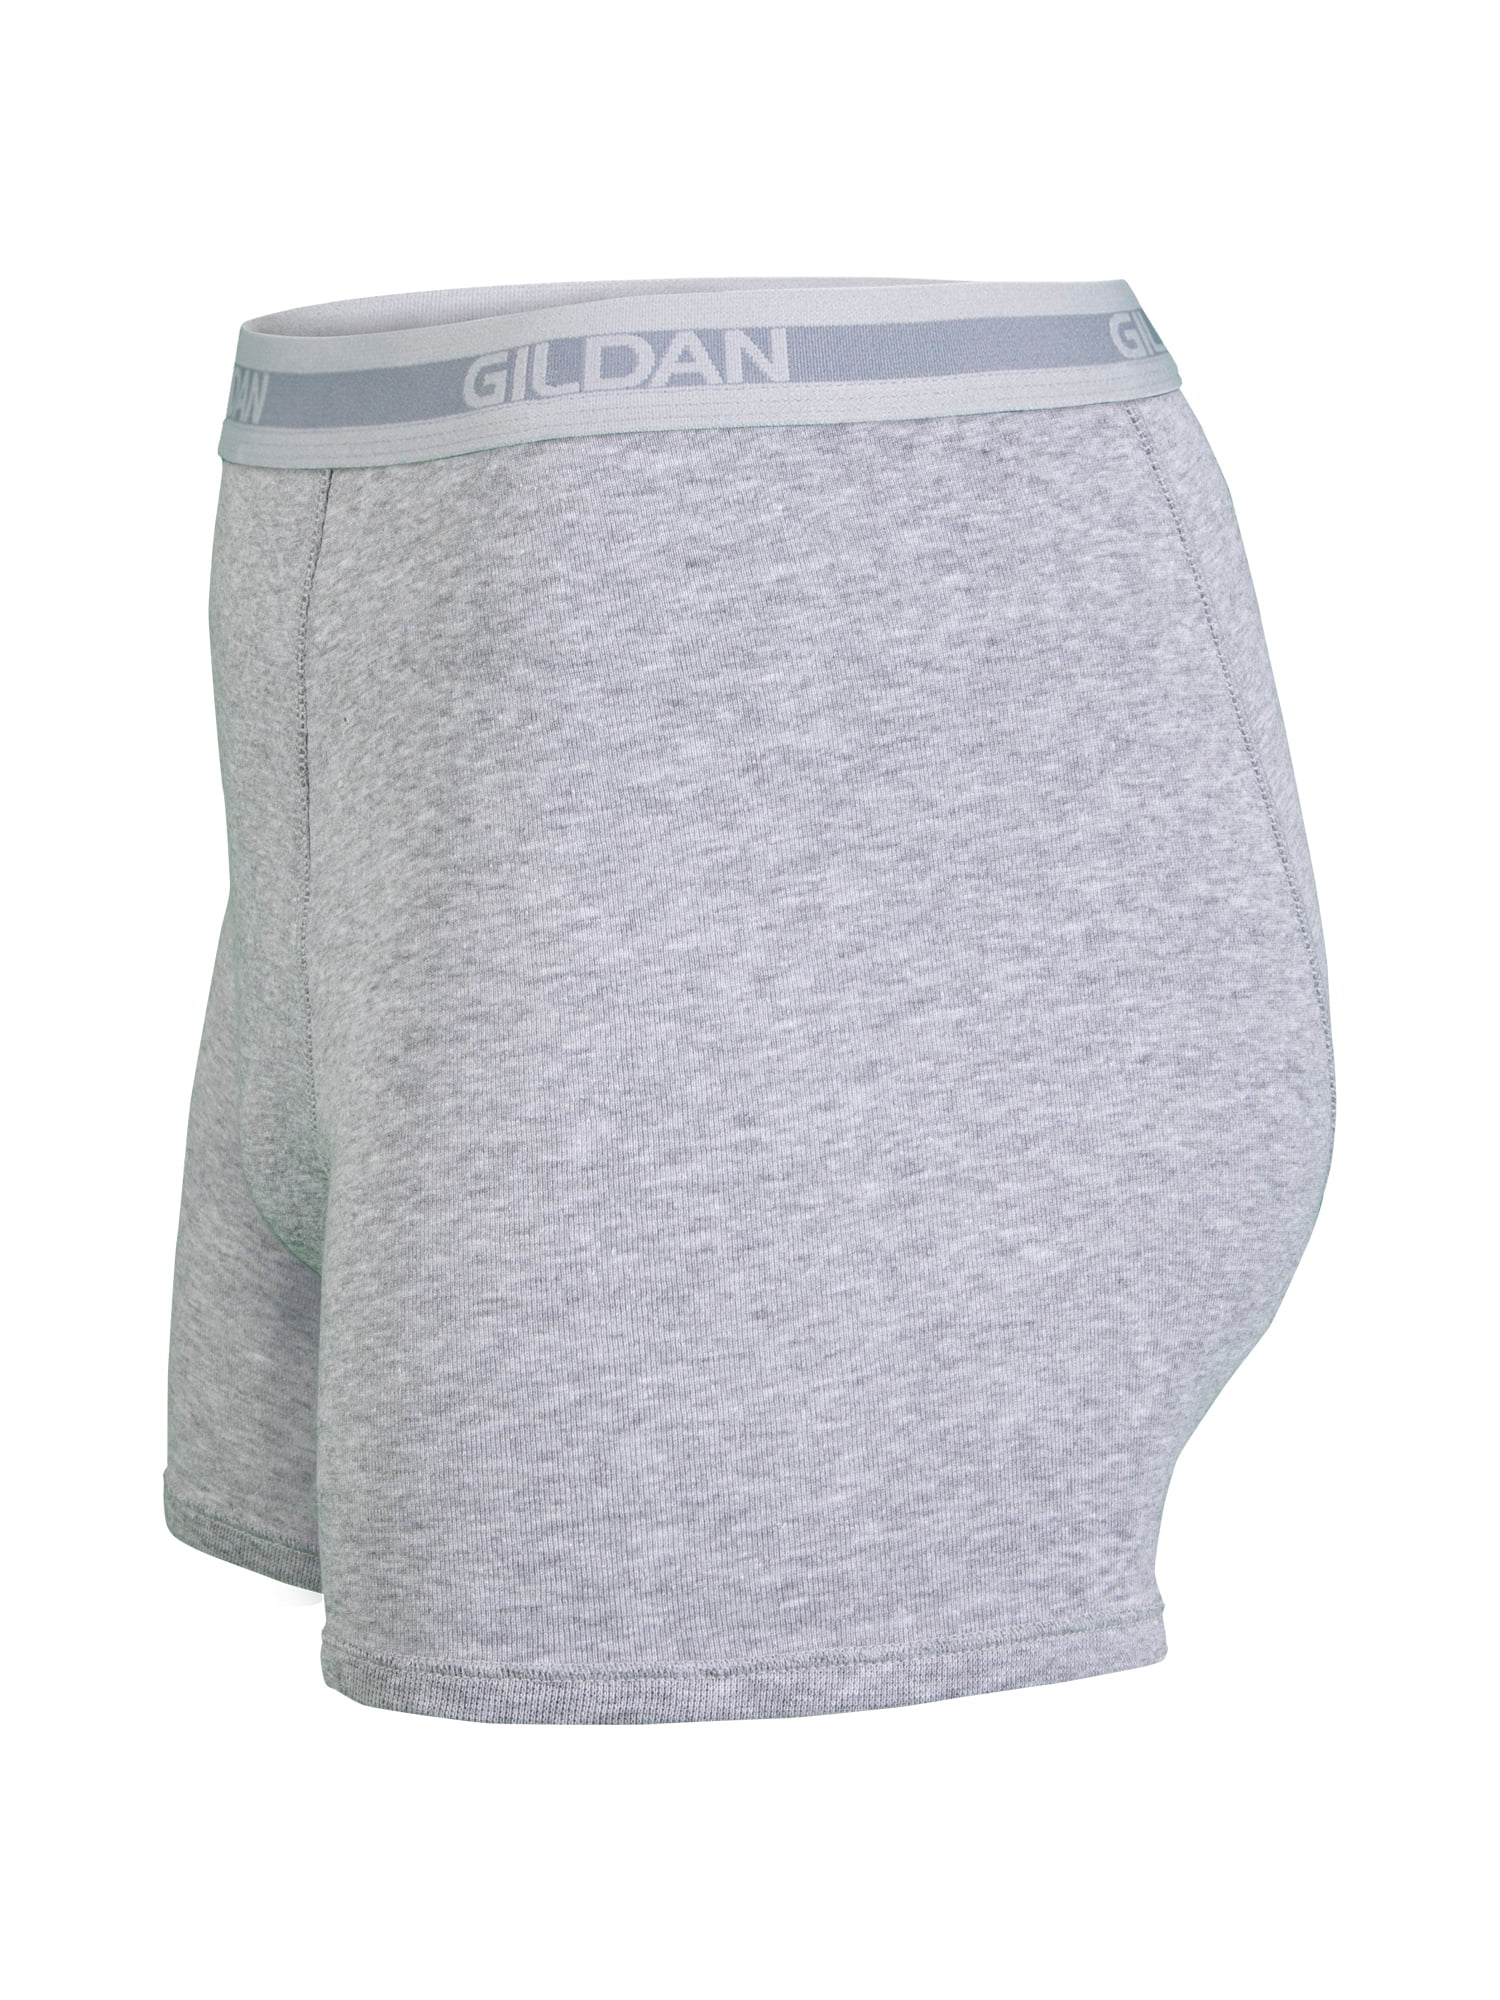 Gildan Size Medium (32-34) Grey White Mens Underwear Boxer Briefs (Read  Descrip)